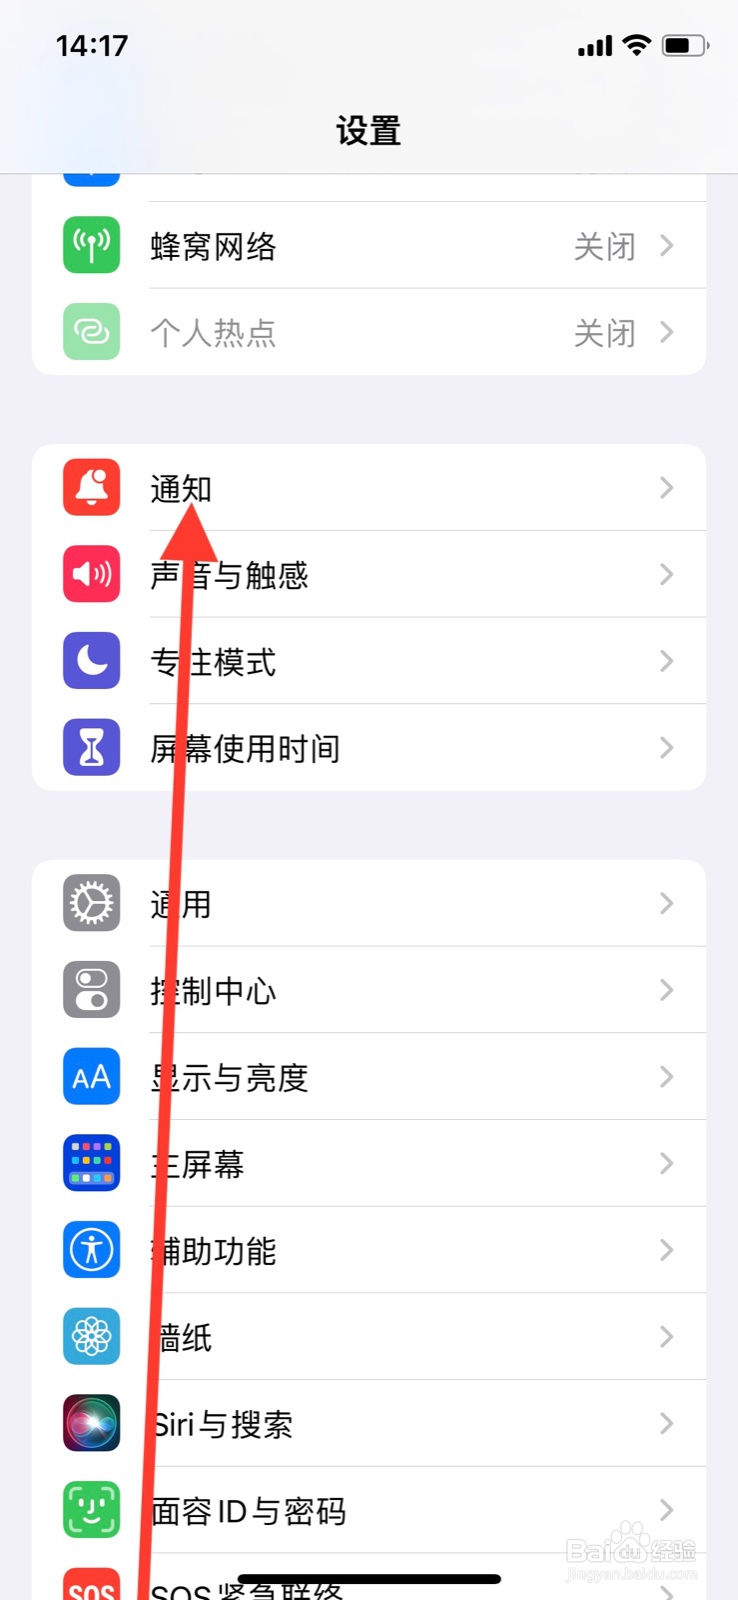 <b>iPhone同意“广东移动”app通知播放提醒声音</b>